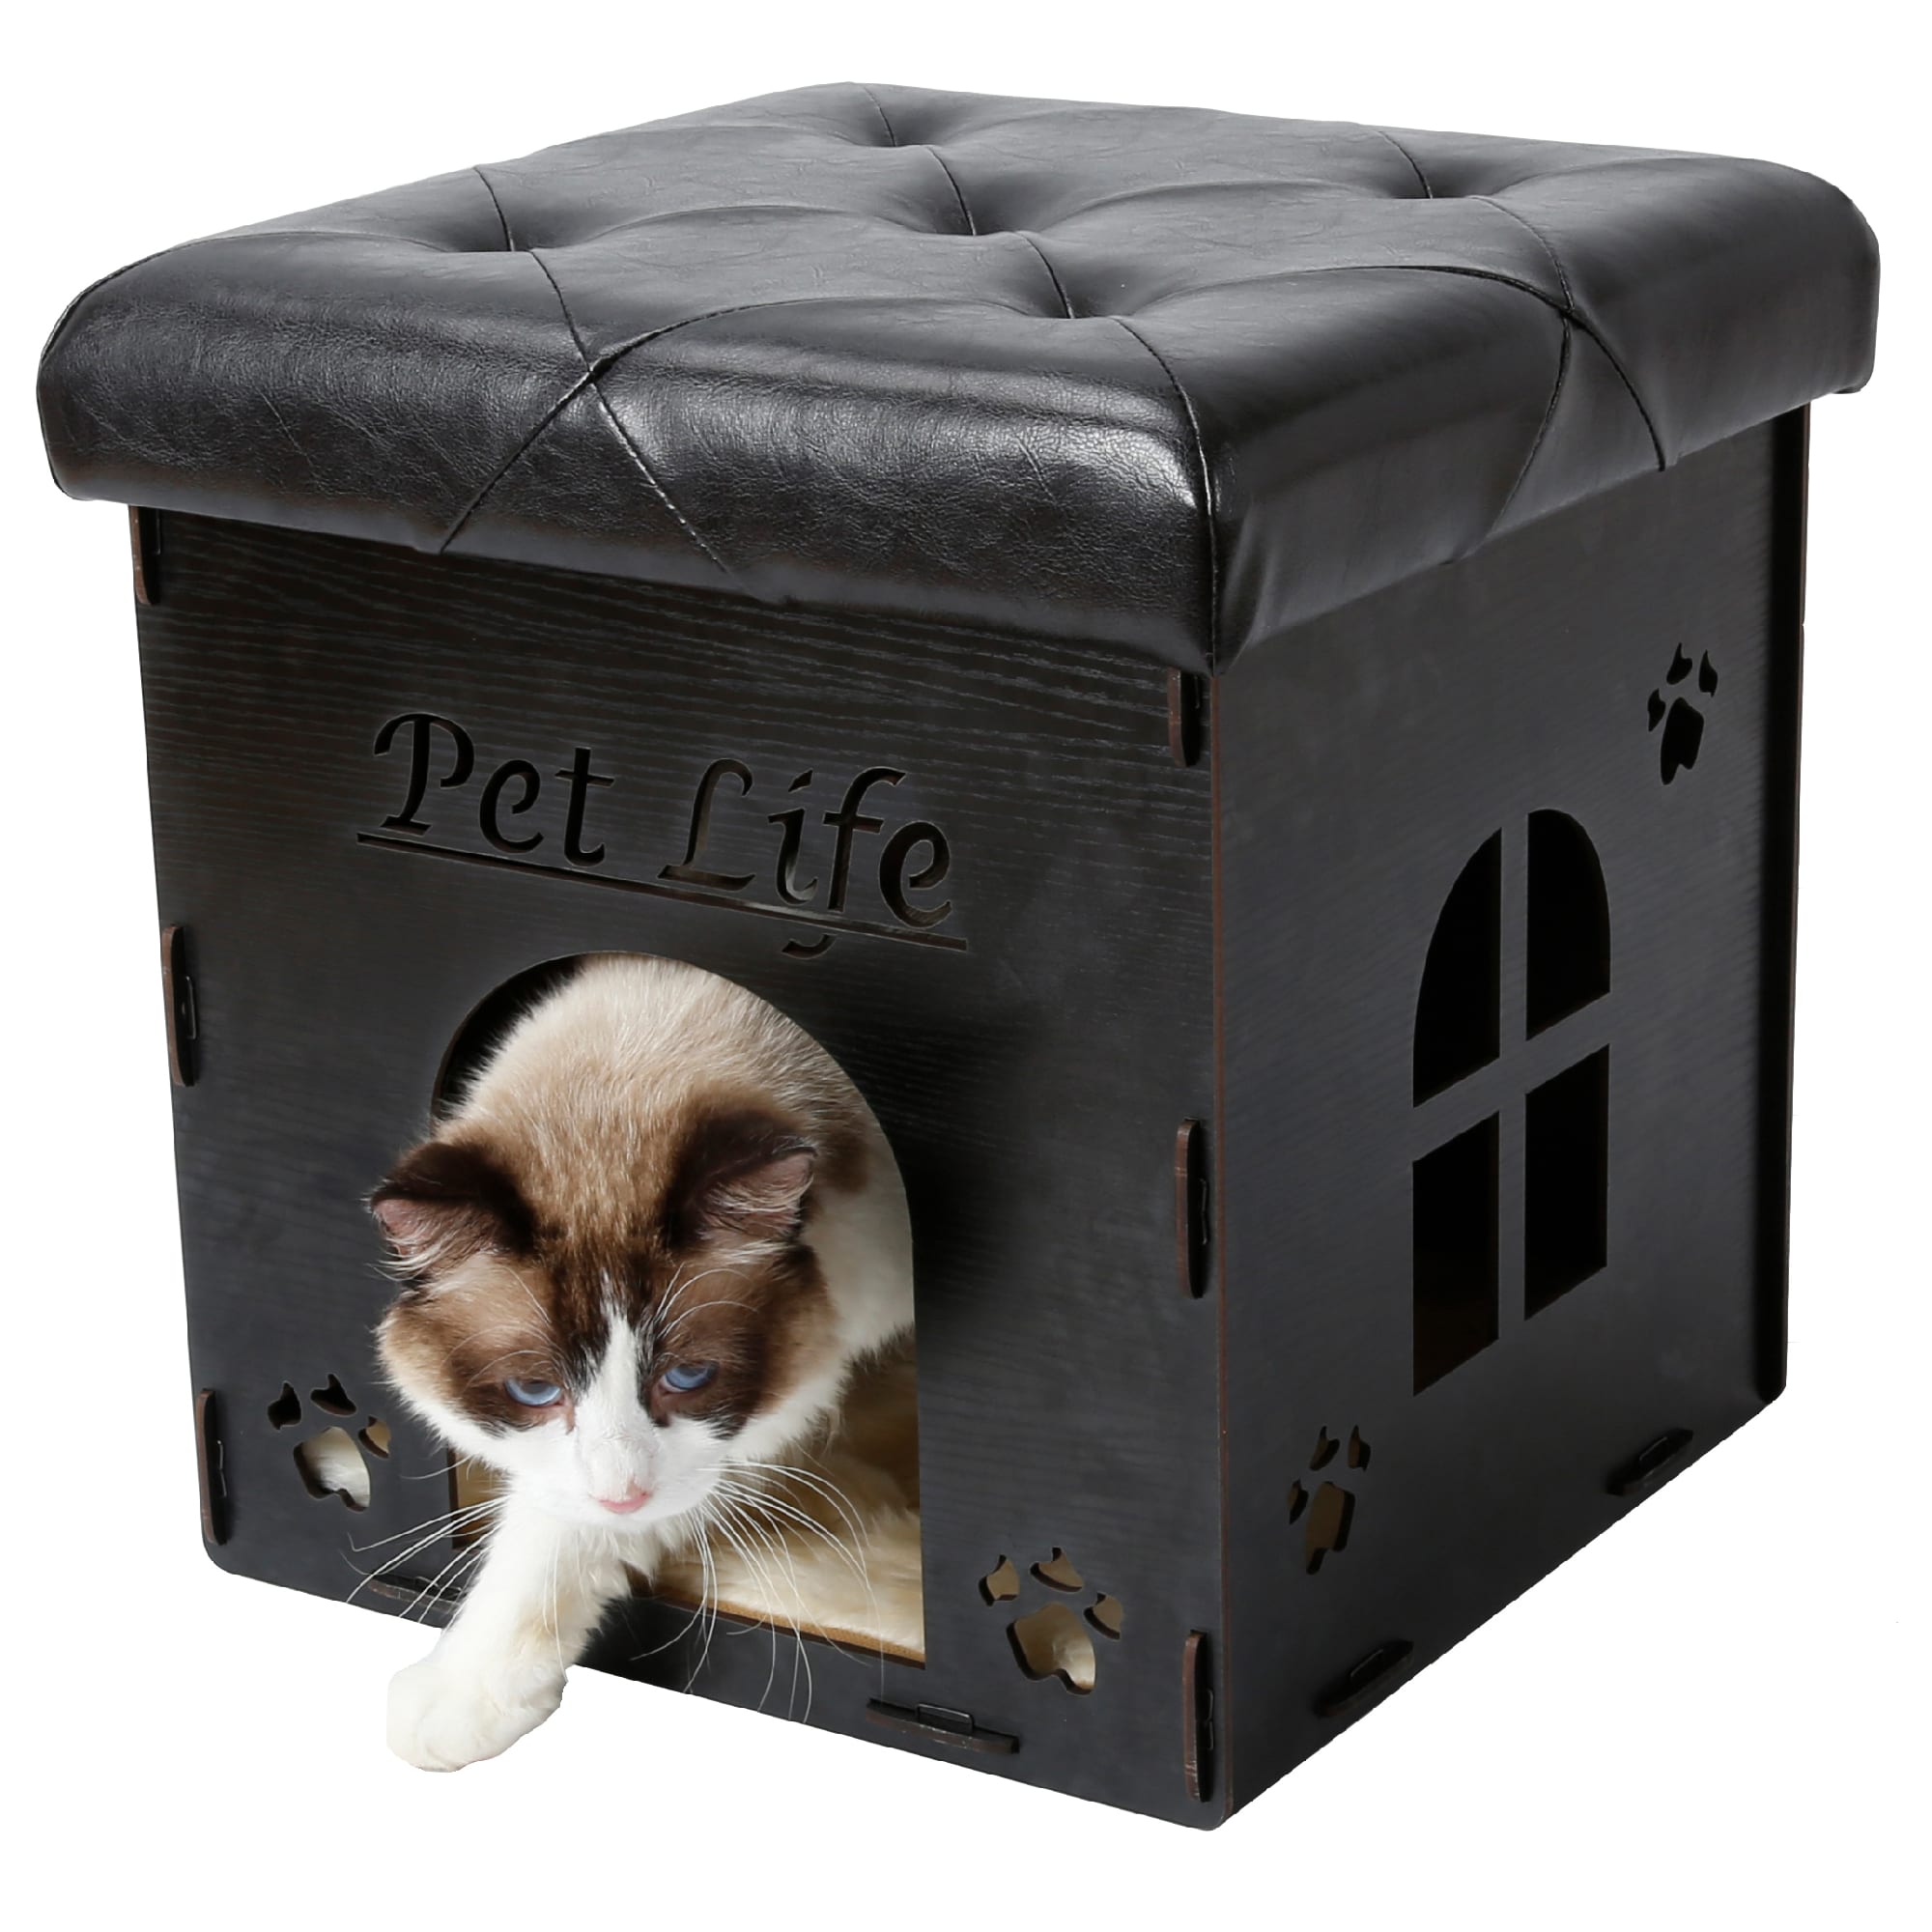 Photos - Bed & Furniture Pet Life Black Foldaway Collapsible Designer Cat House Furniture 